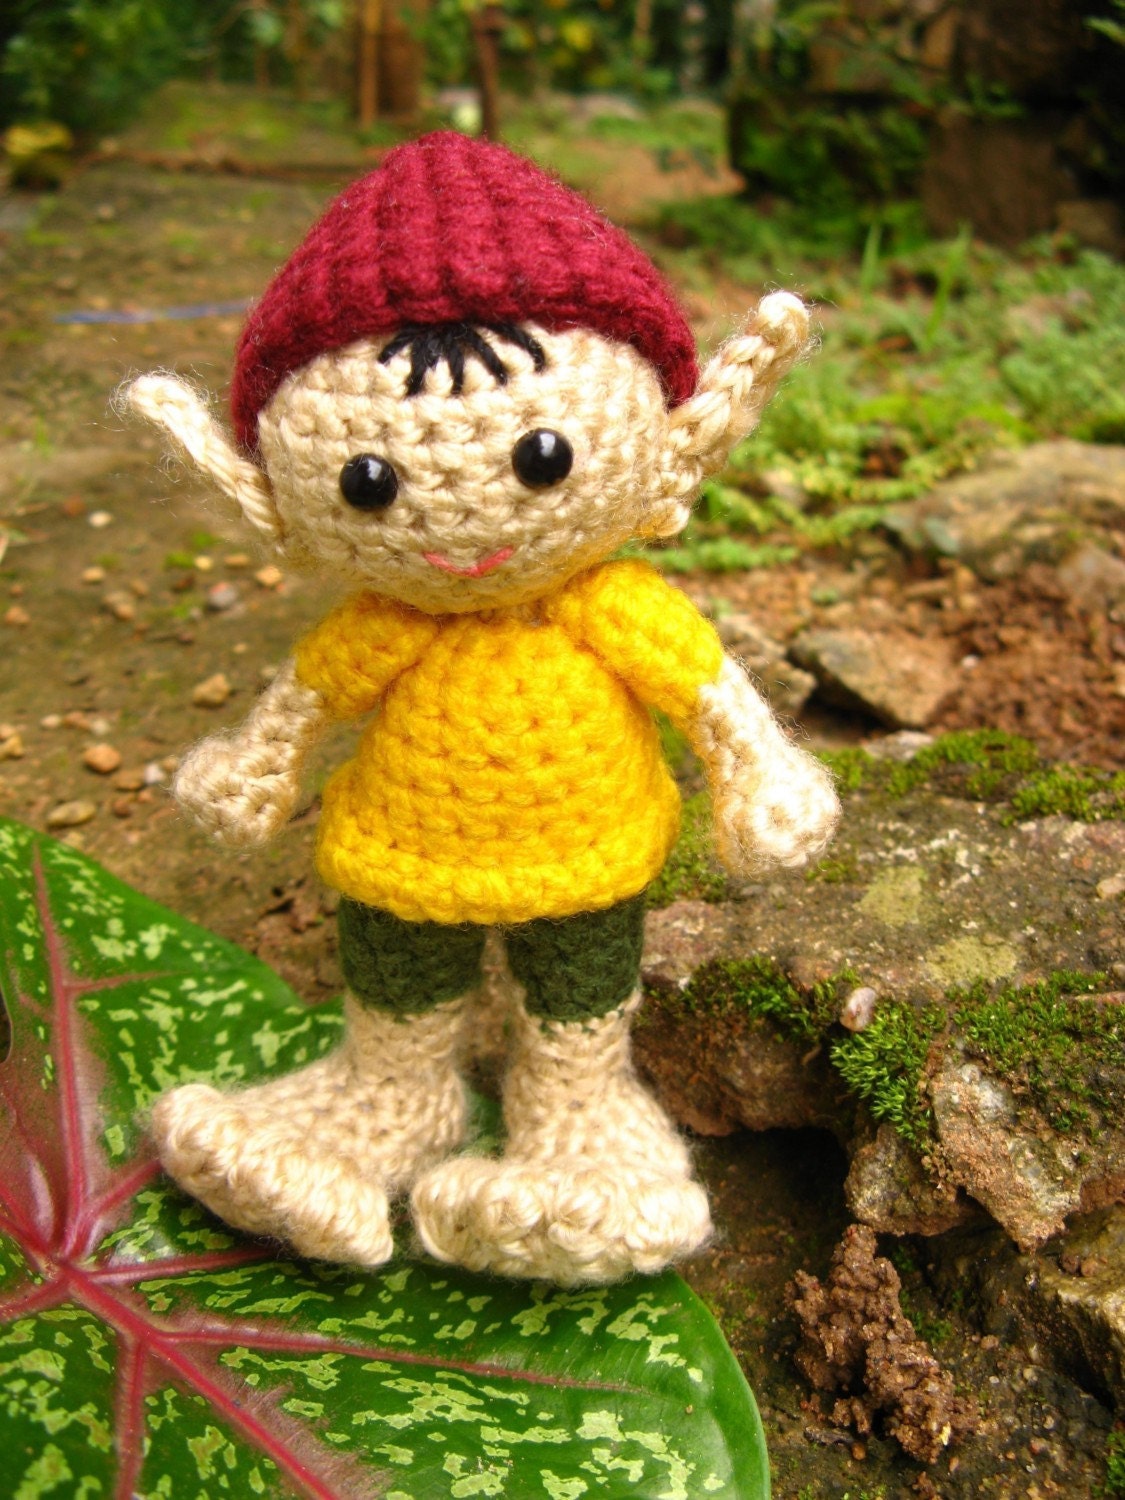 Amigurumi Crochet Pattern PDF - A Little Elf named Big Foot